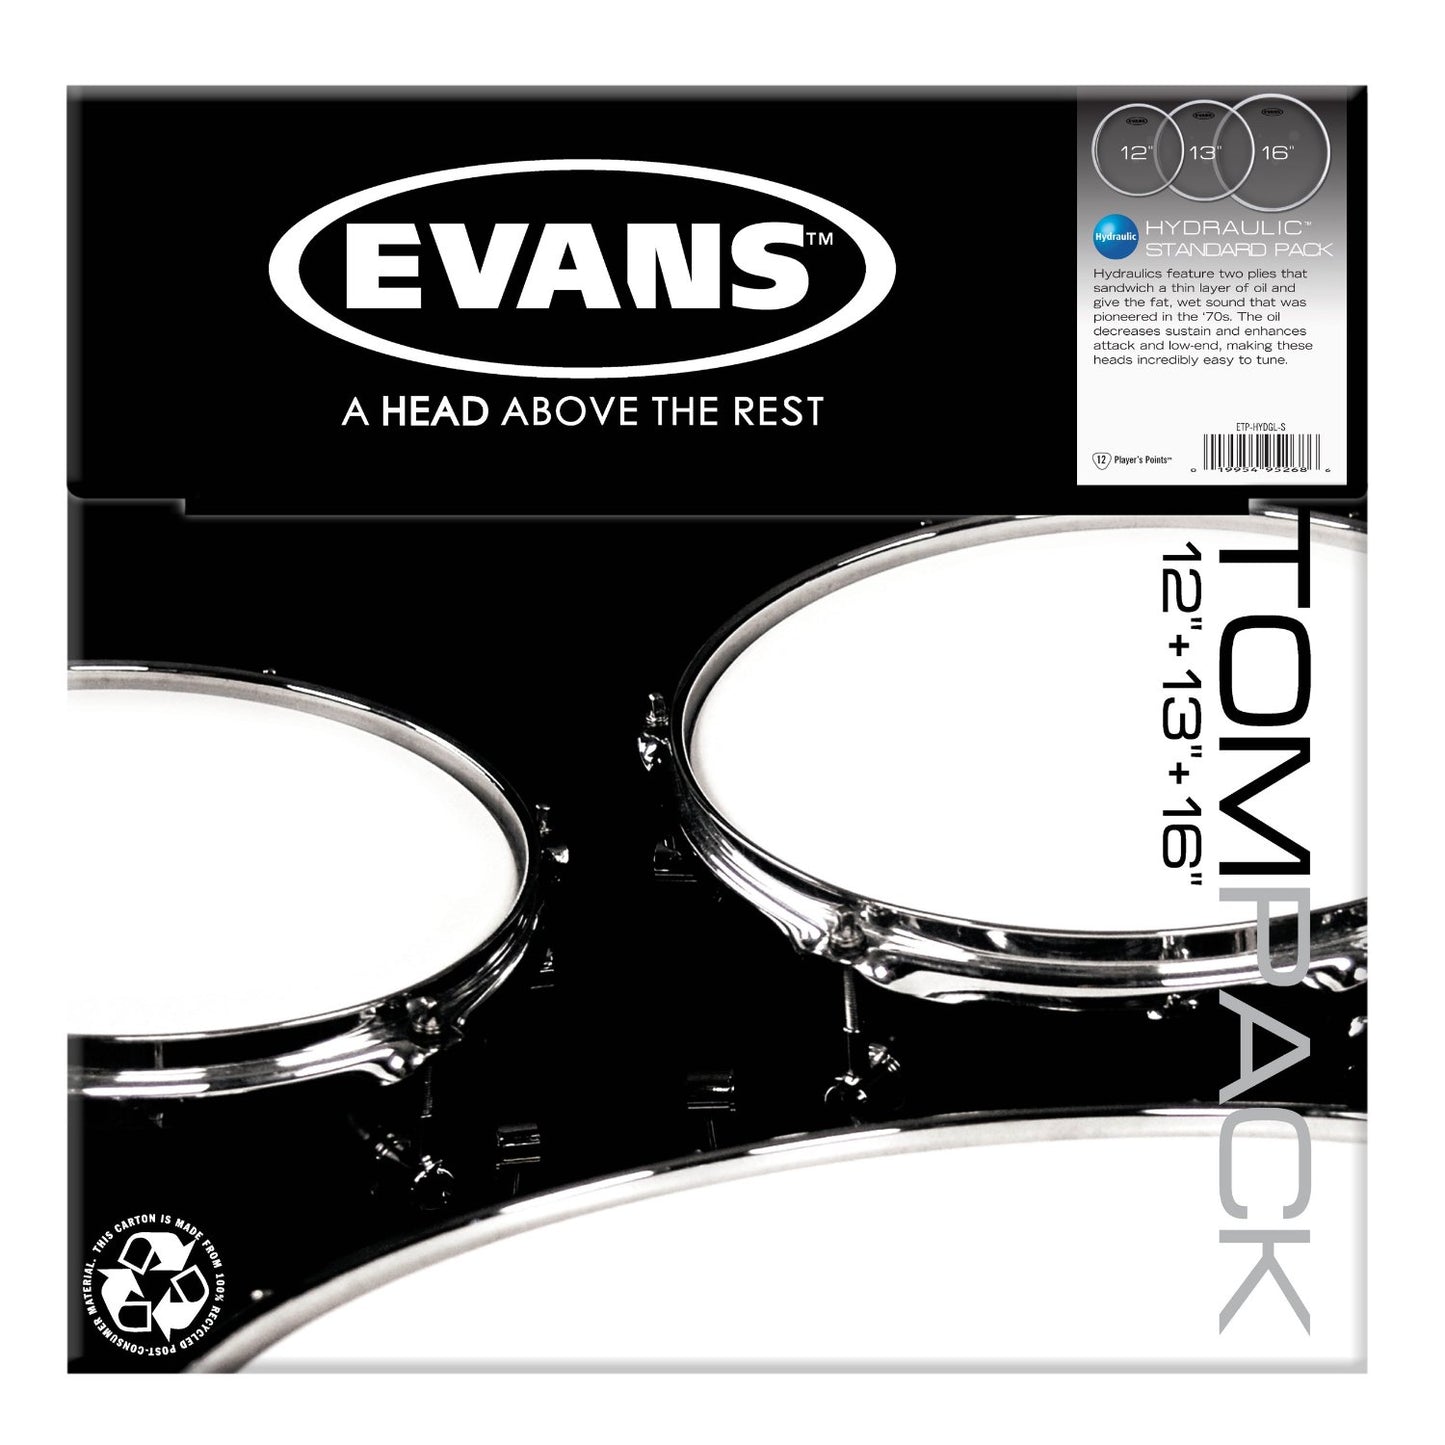 Evans Hydraulic Glass Tompack, Standard (12 inch, 13 inch, 16 inch)